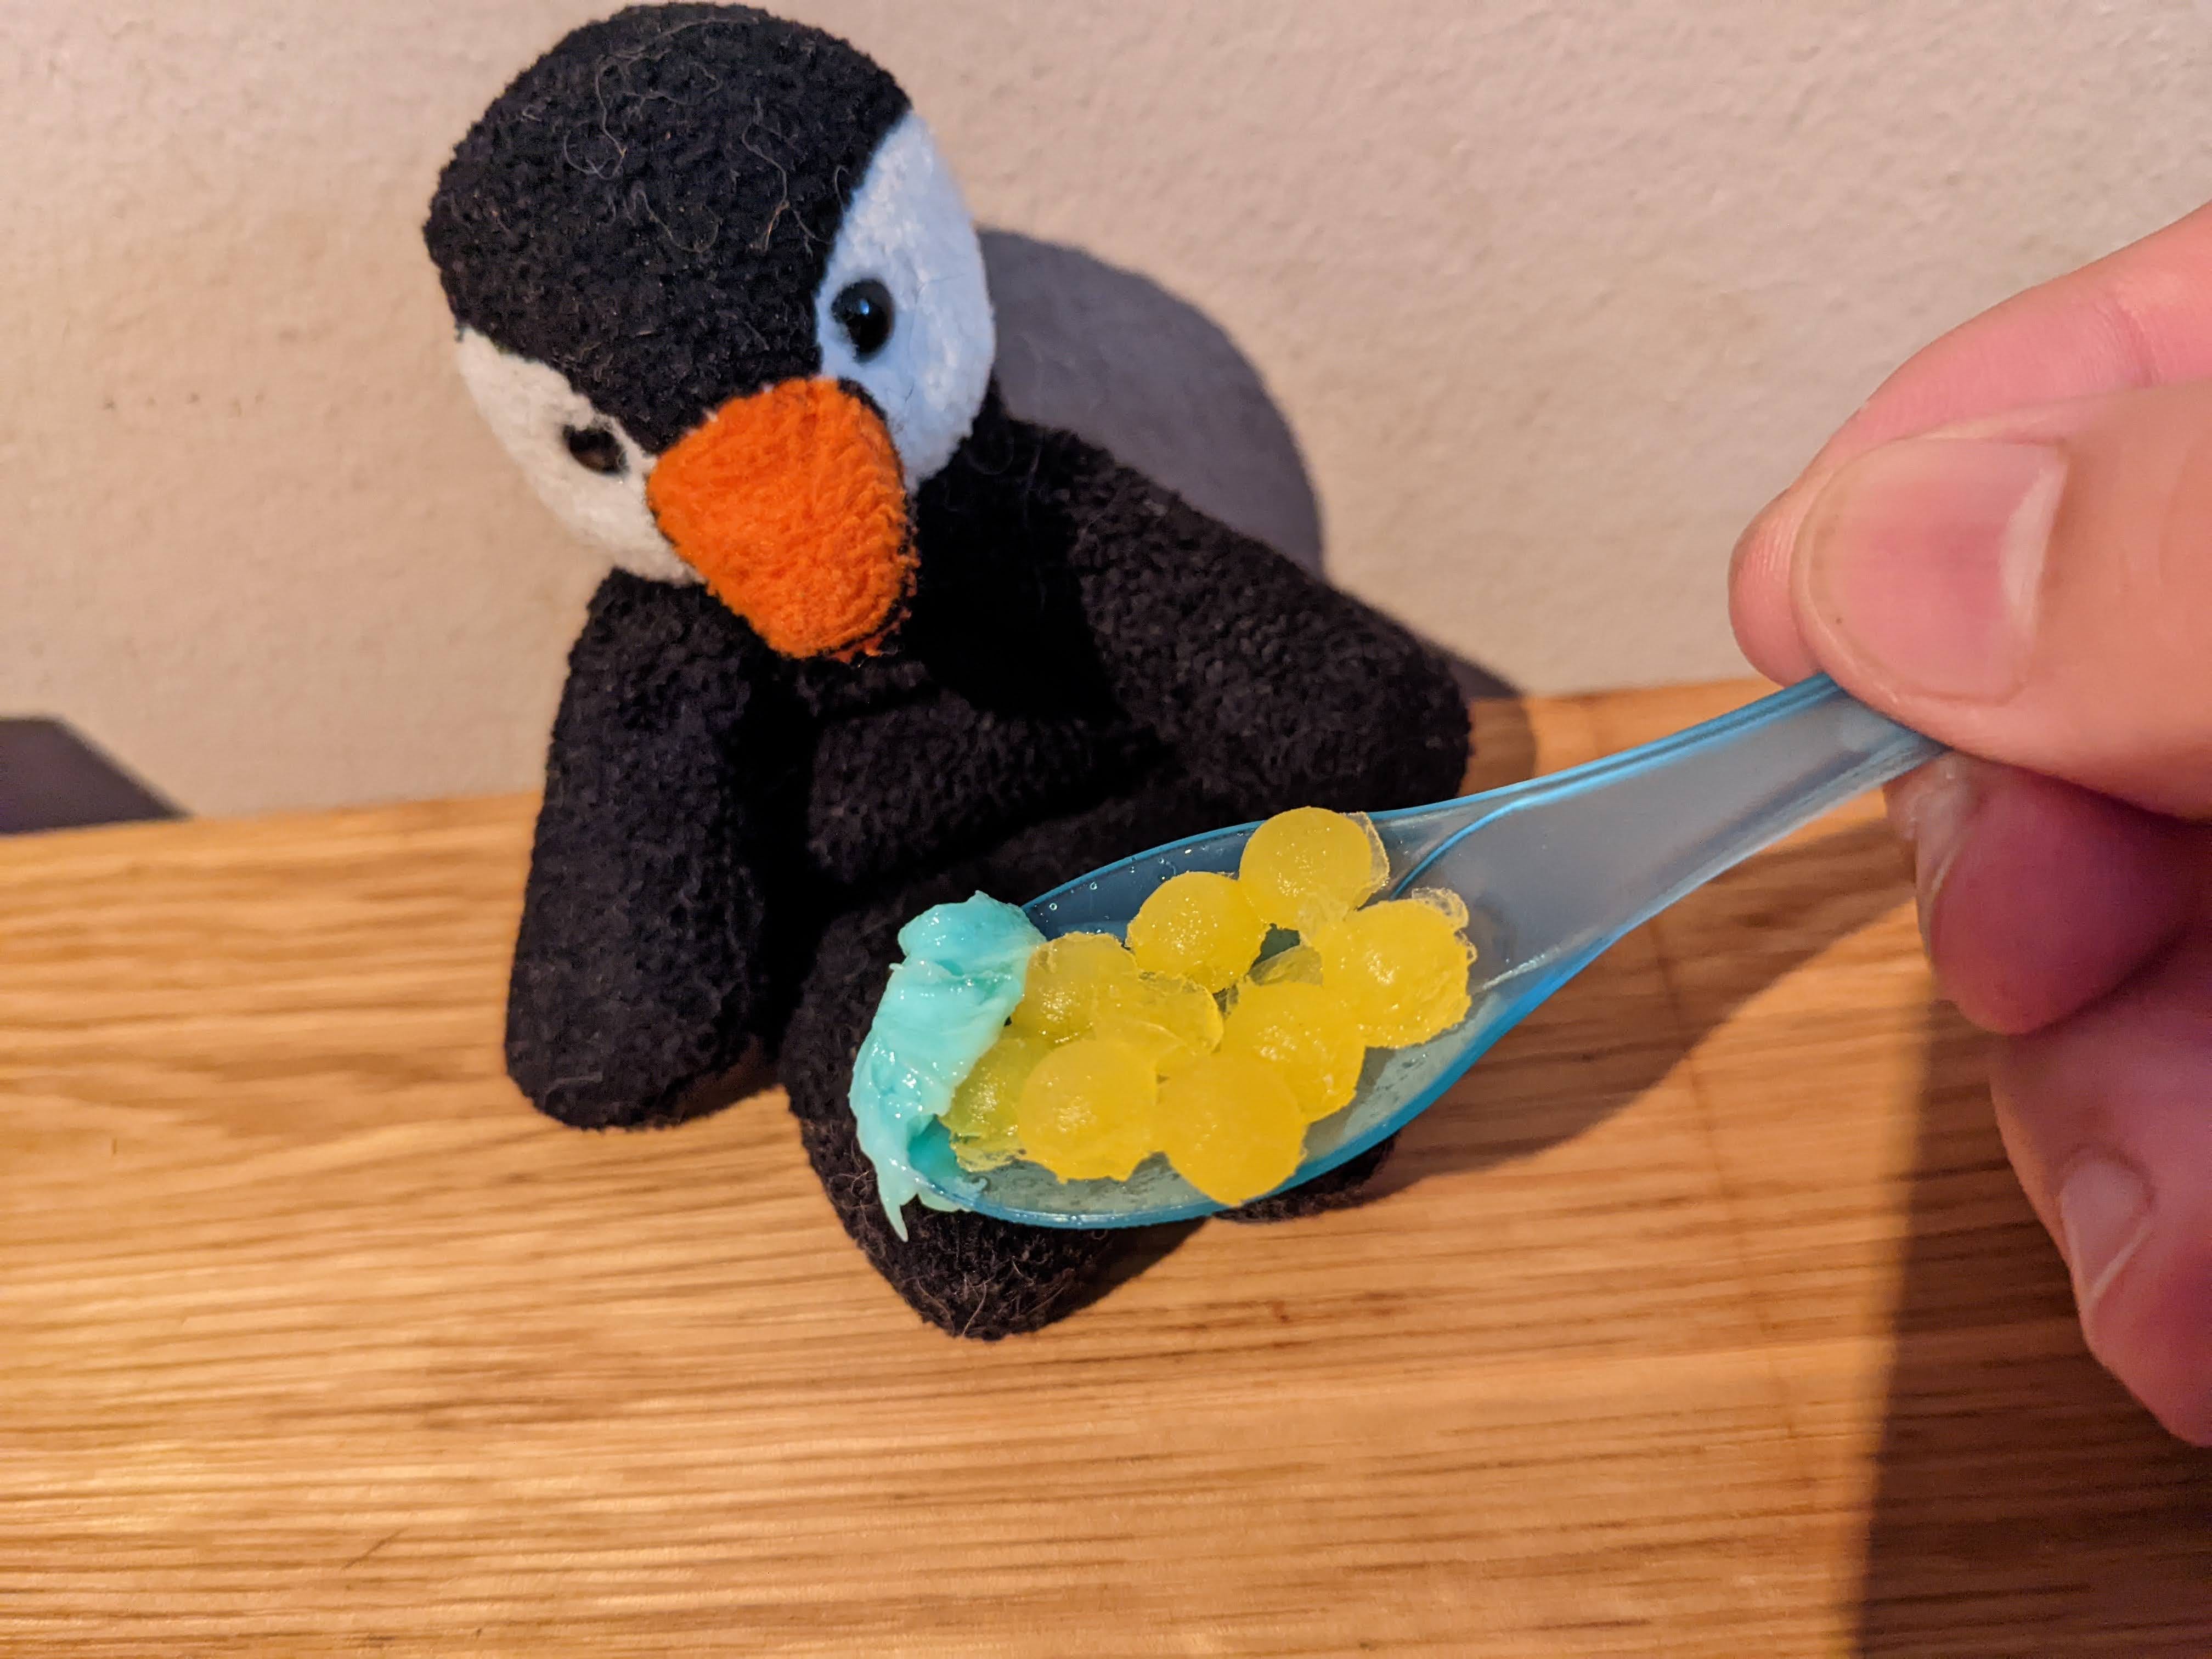 Penguin Plastic Mold-penguin W/ice Cream Mold DIY Mold-candy 